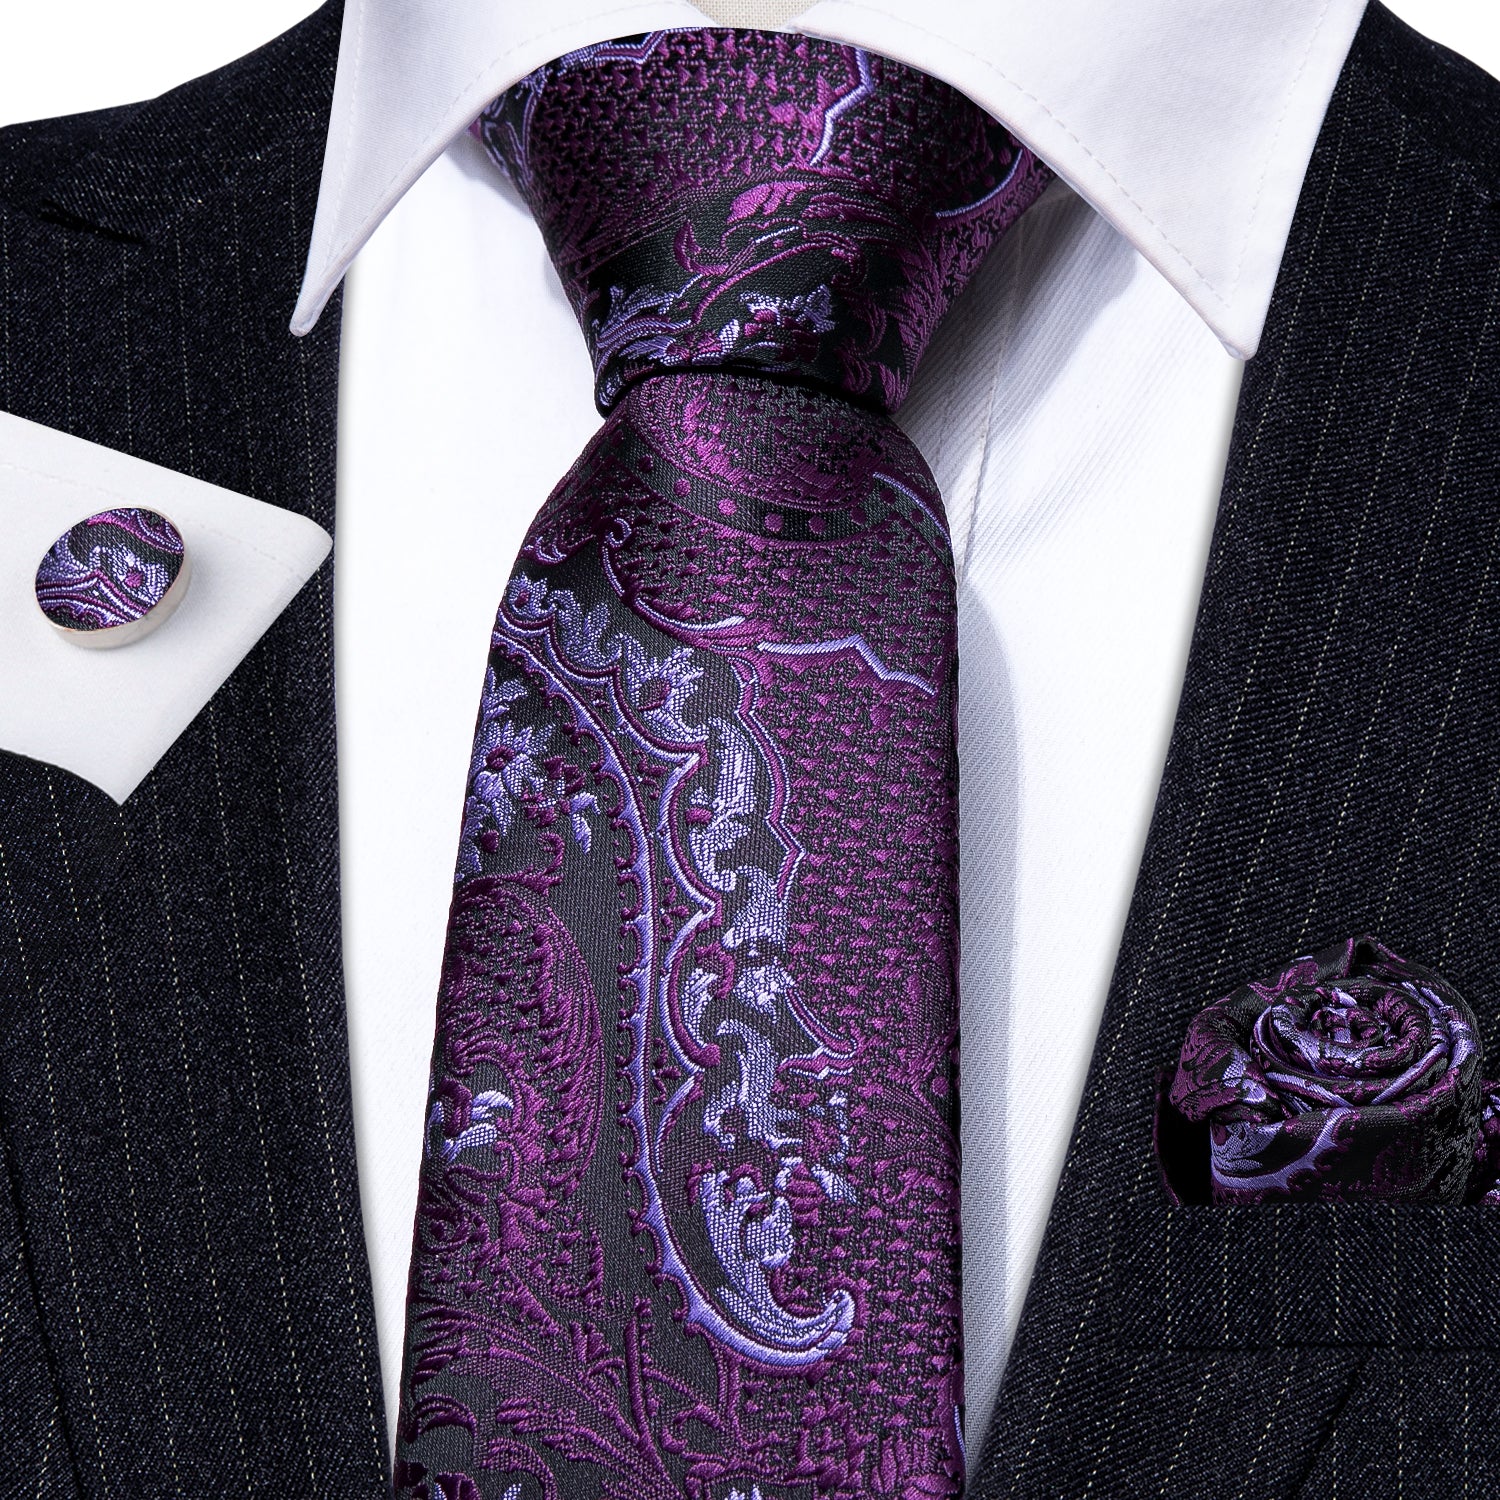 Deep Purple Paisley Necktie Pocket Square Cufflinks Set